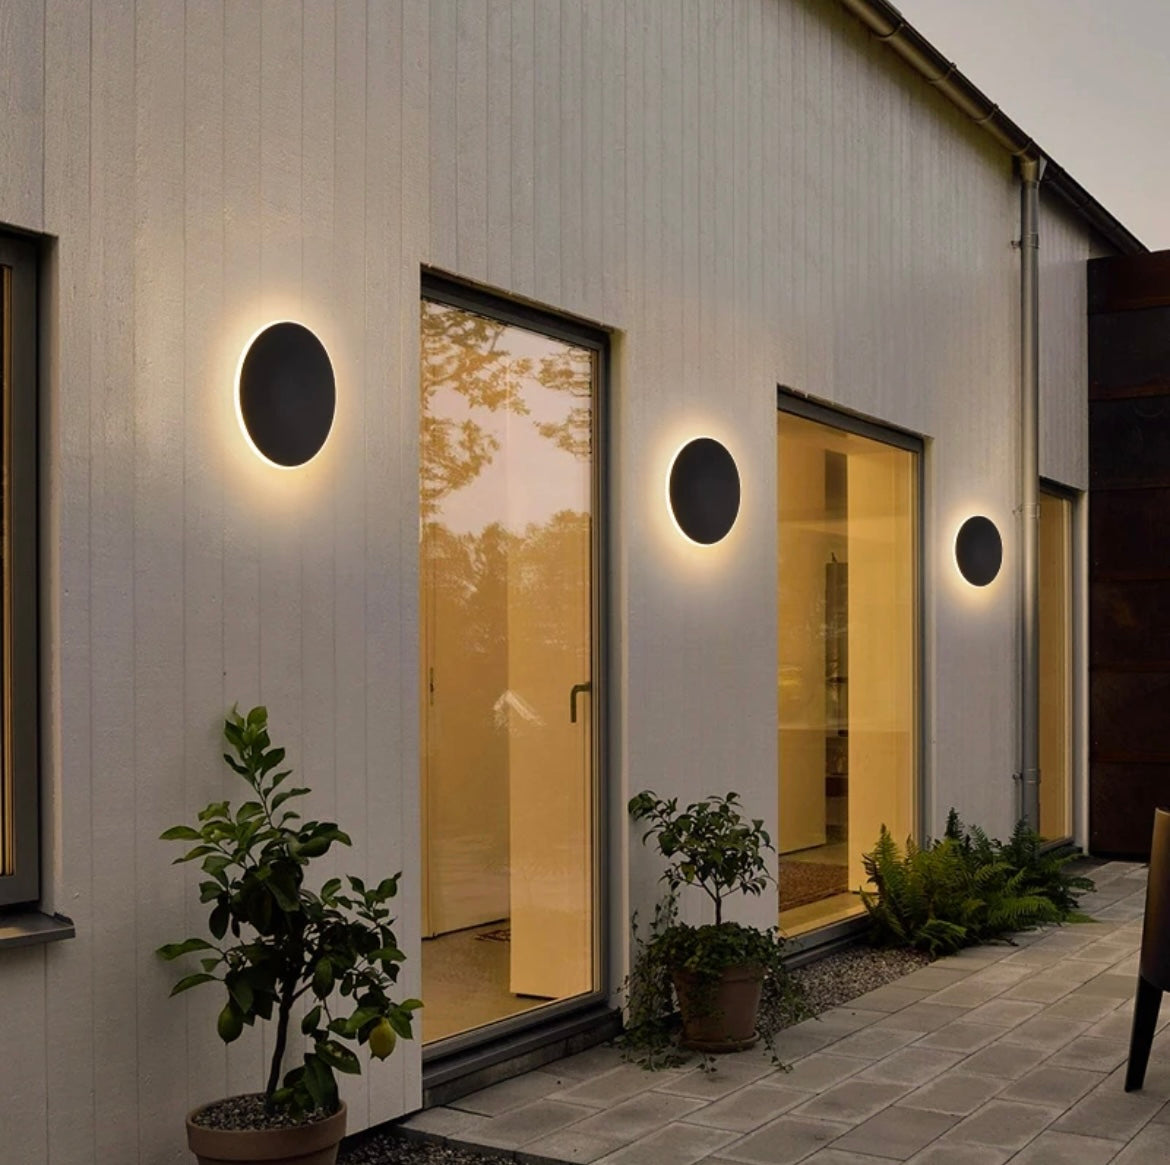 Nordic Circular Outdoor Waterproof Porch Light